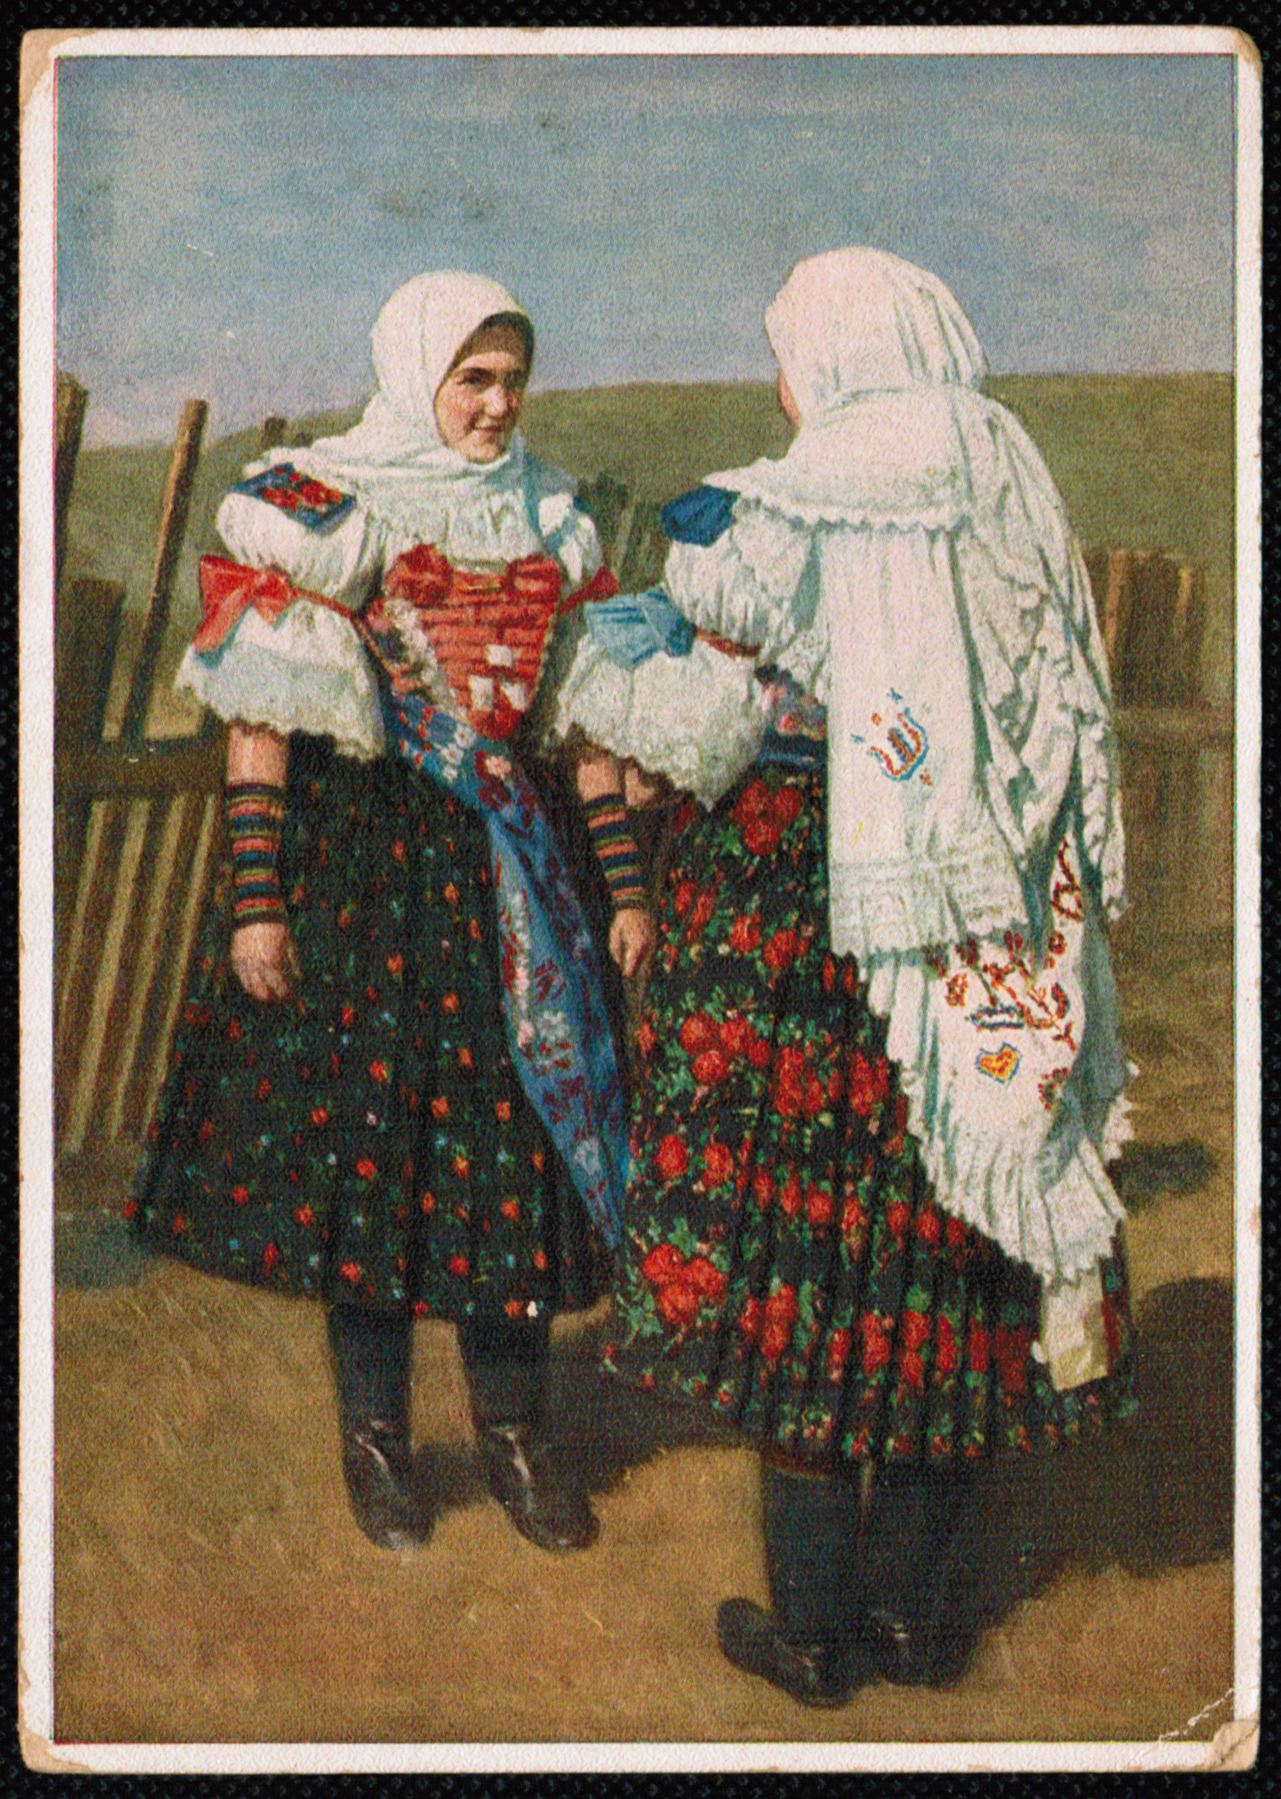 1960 Postcard Retzlaff Zipser folk costumes, German peasant women from the Zipser Niederland, festive costumes card front image